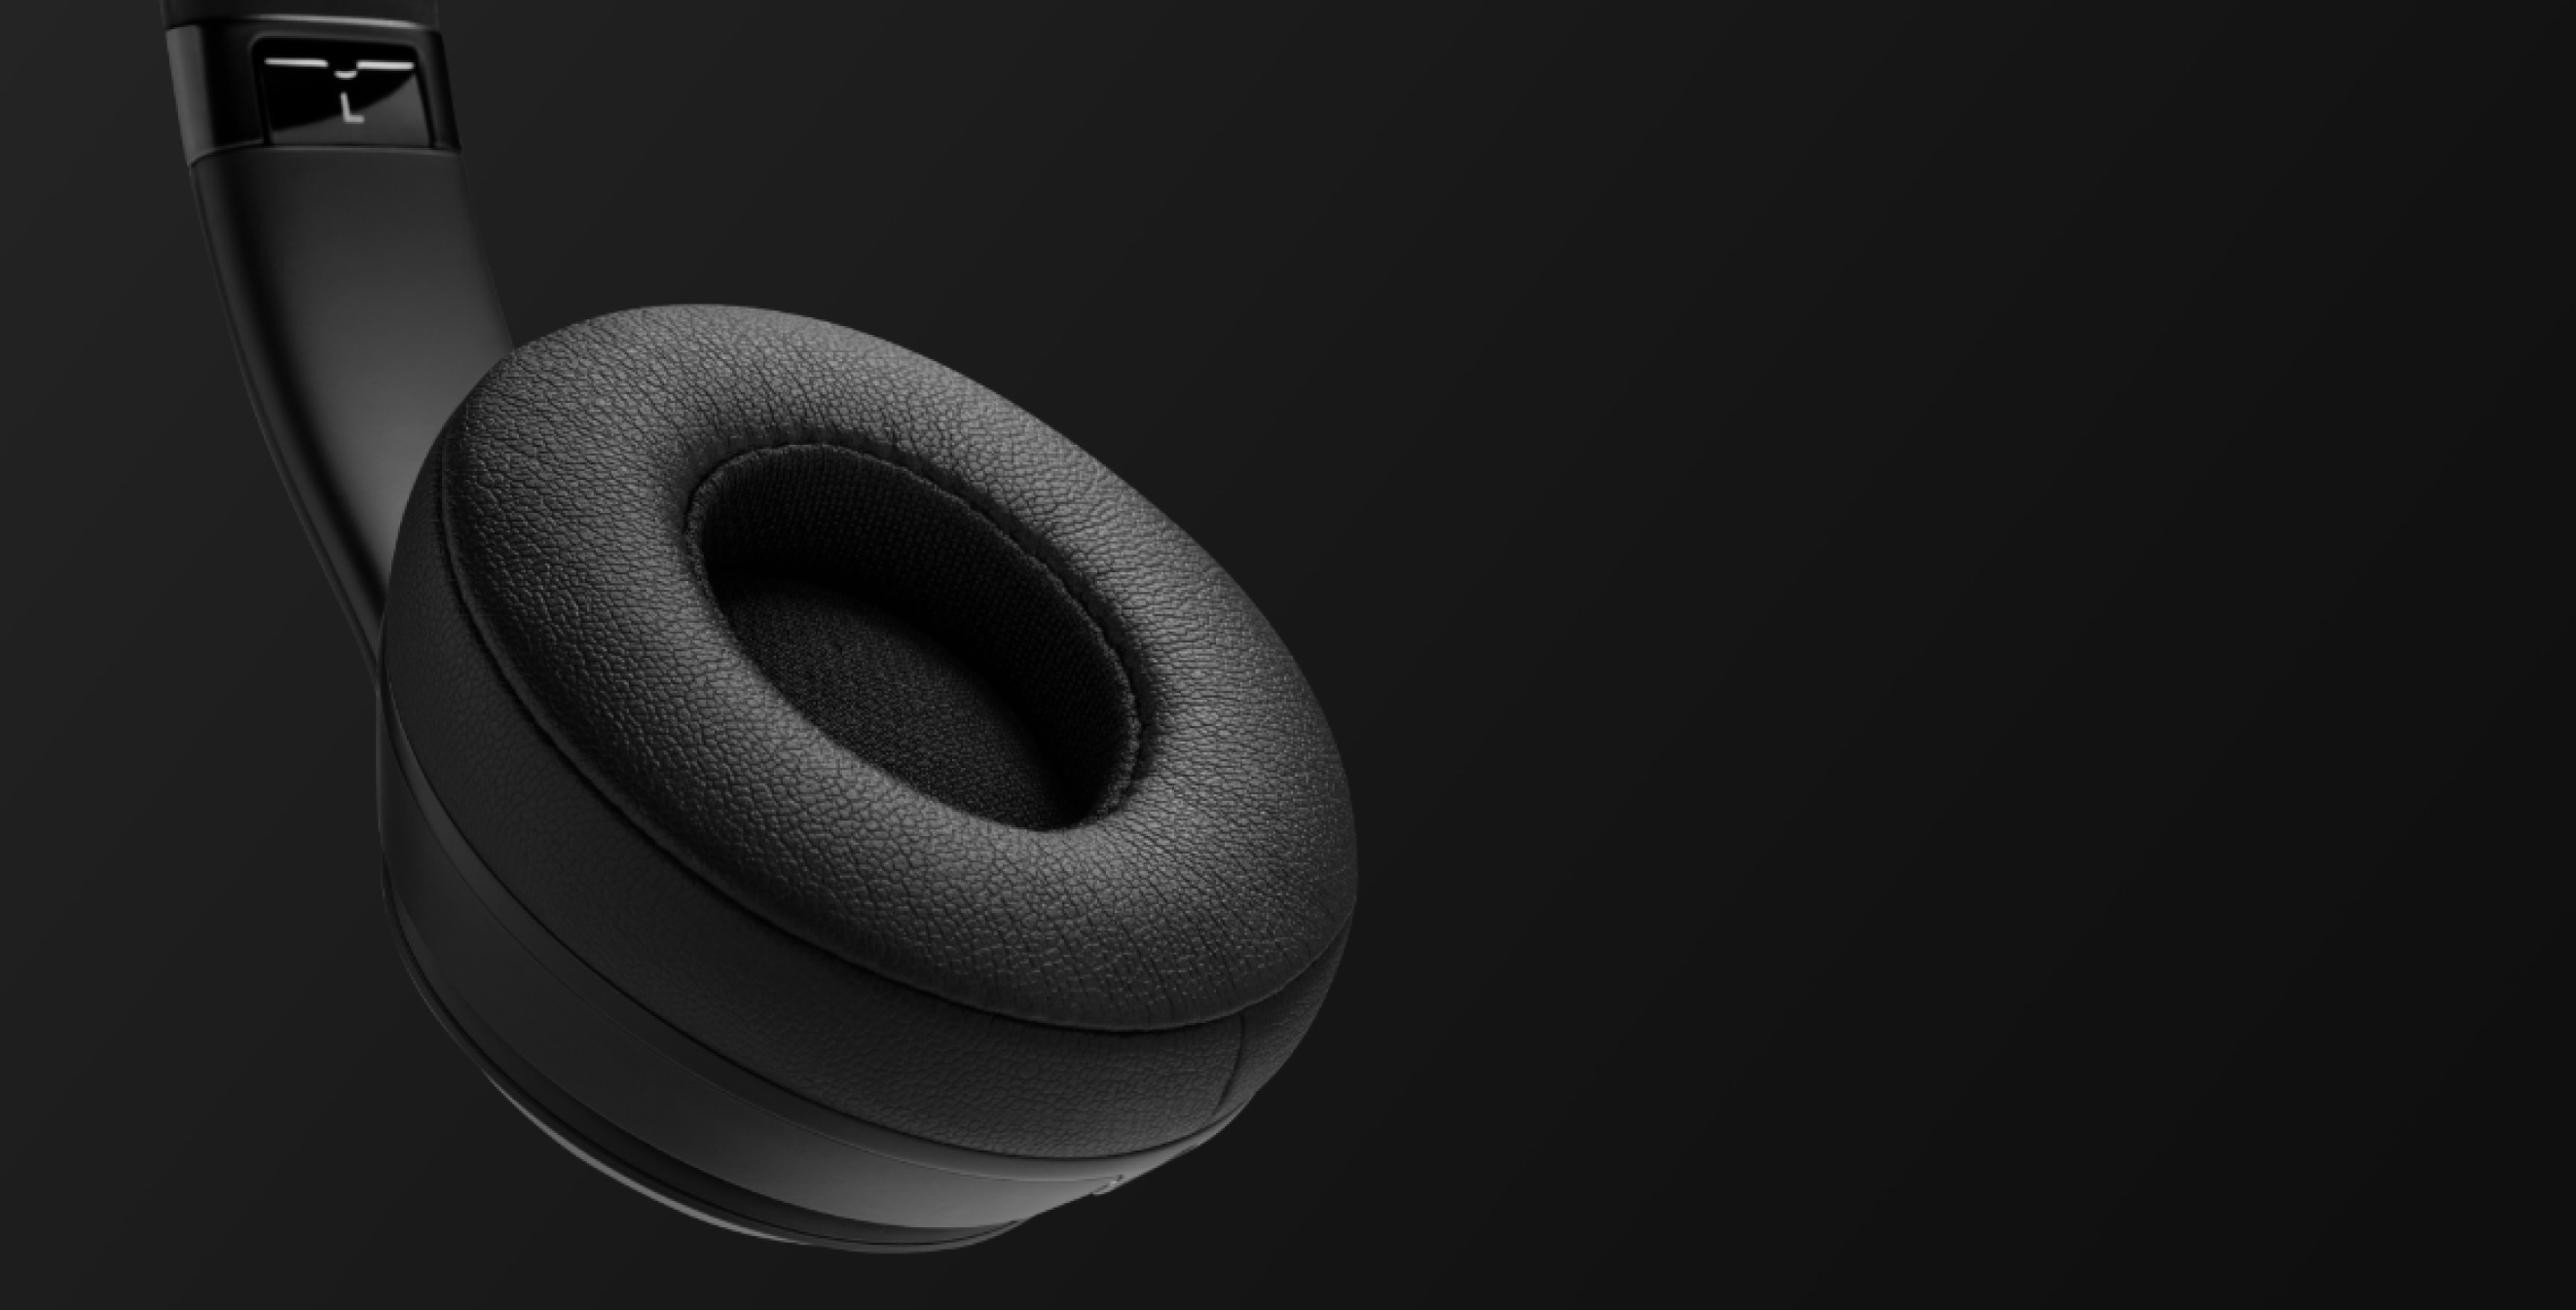 Closeup of Beats Solo3 Wireless headphones in matte black